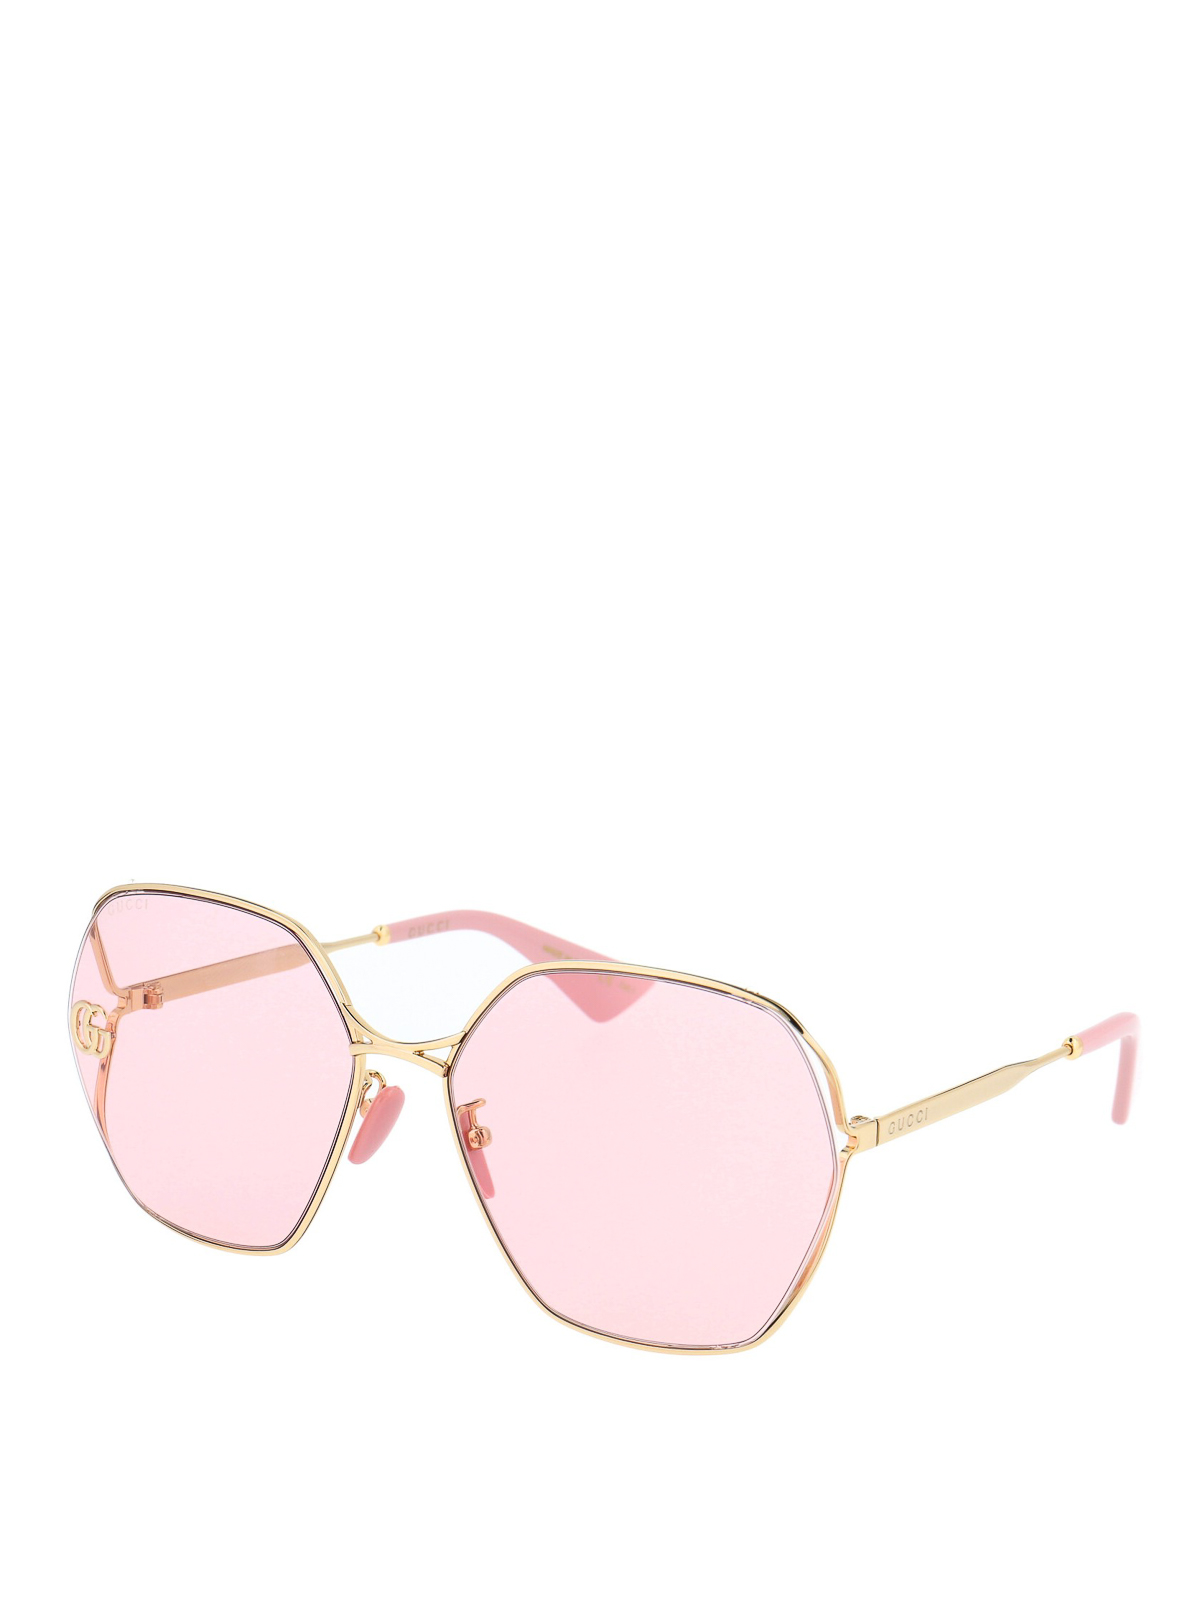 gucci sunglasses pink lens